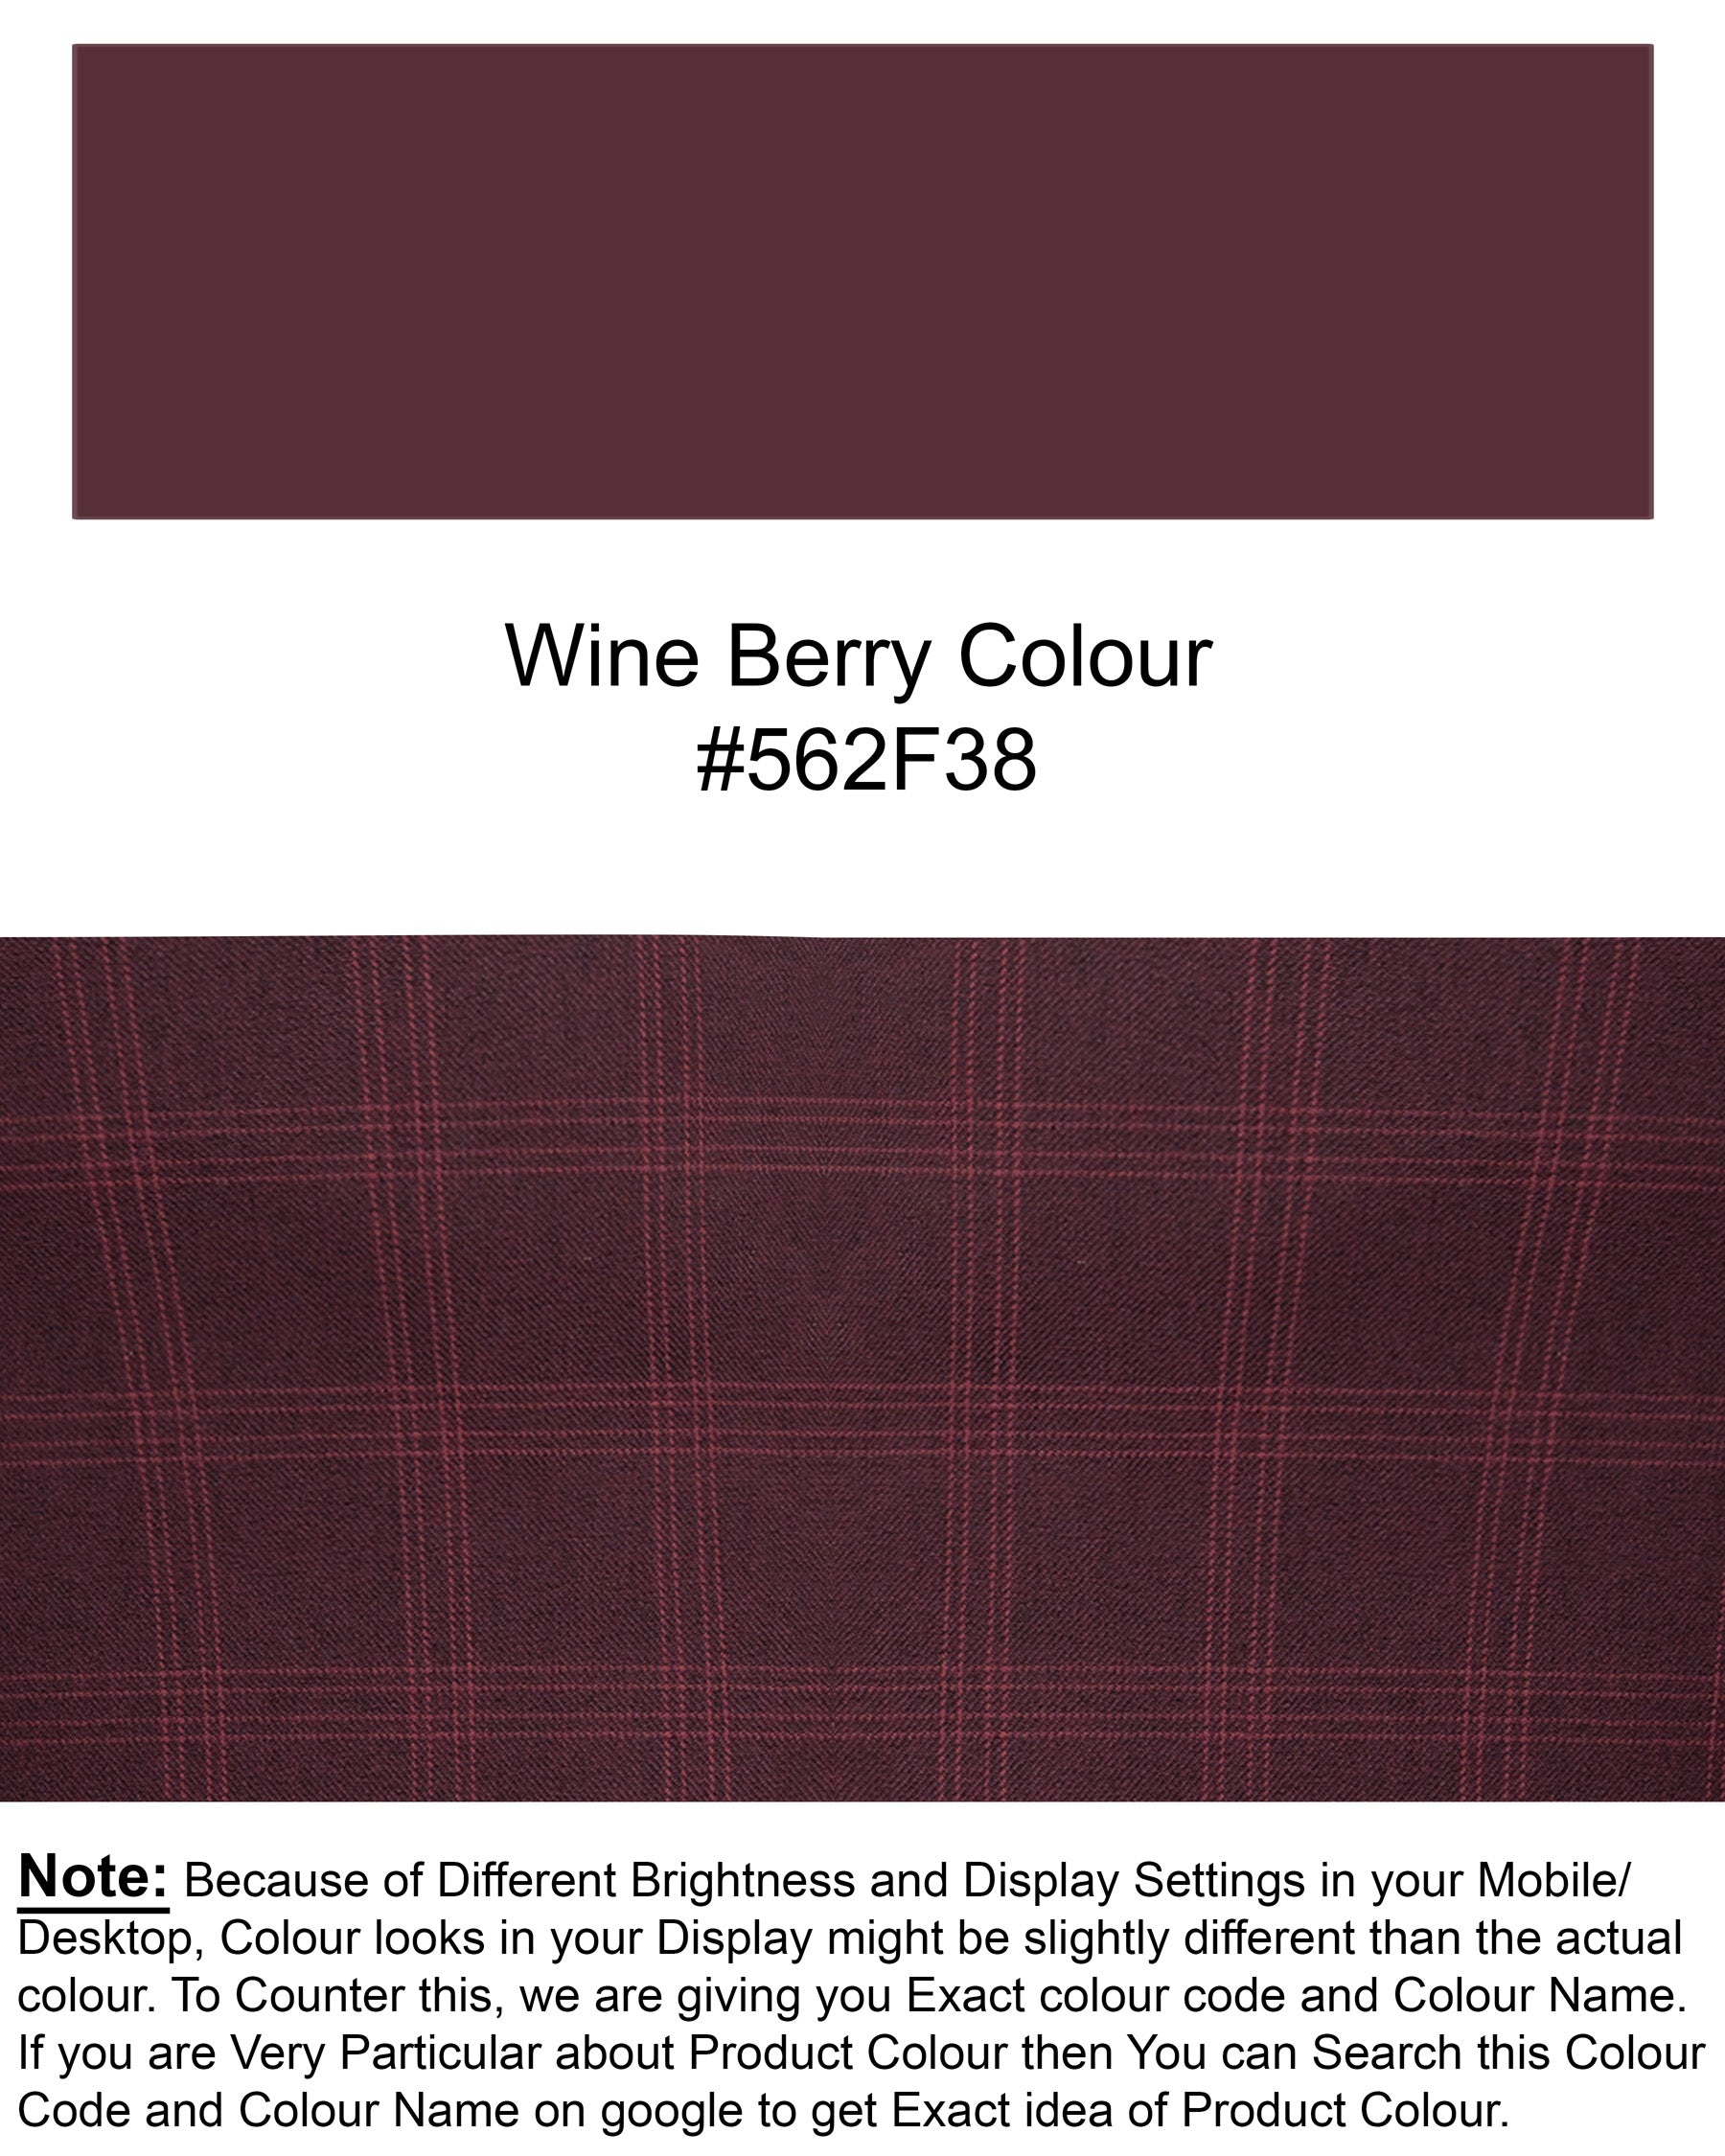 Half wine Checkered Wool Rich and Half White Premium Cotton Blazer BL1586-SBP-D26-36, BL1586-SBP-D26-38, BL1586-SBP-D26-40, BL1586-SBP-D26-42, BL1586-SBP-D26-44, BL1586-SBP-D26-46, BL1586-SBP-D26-48, BL1586-SBP-D26-50, BL1586-SBP-D26-52, BL1586-SBP-D26-54, BL1586-SBP-D26-56, BL1586-SBP-D26-58, BL1586-SBP-D26-60